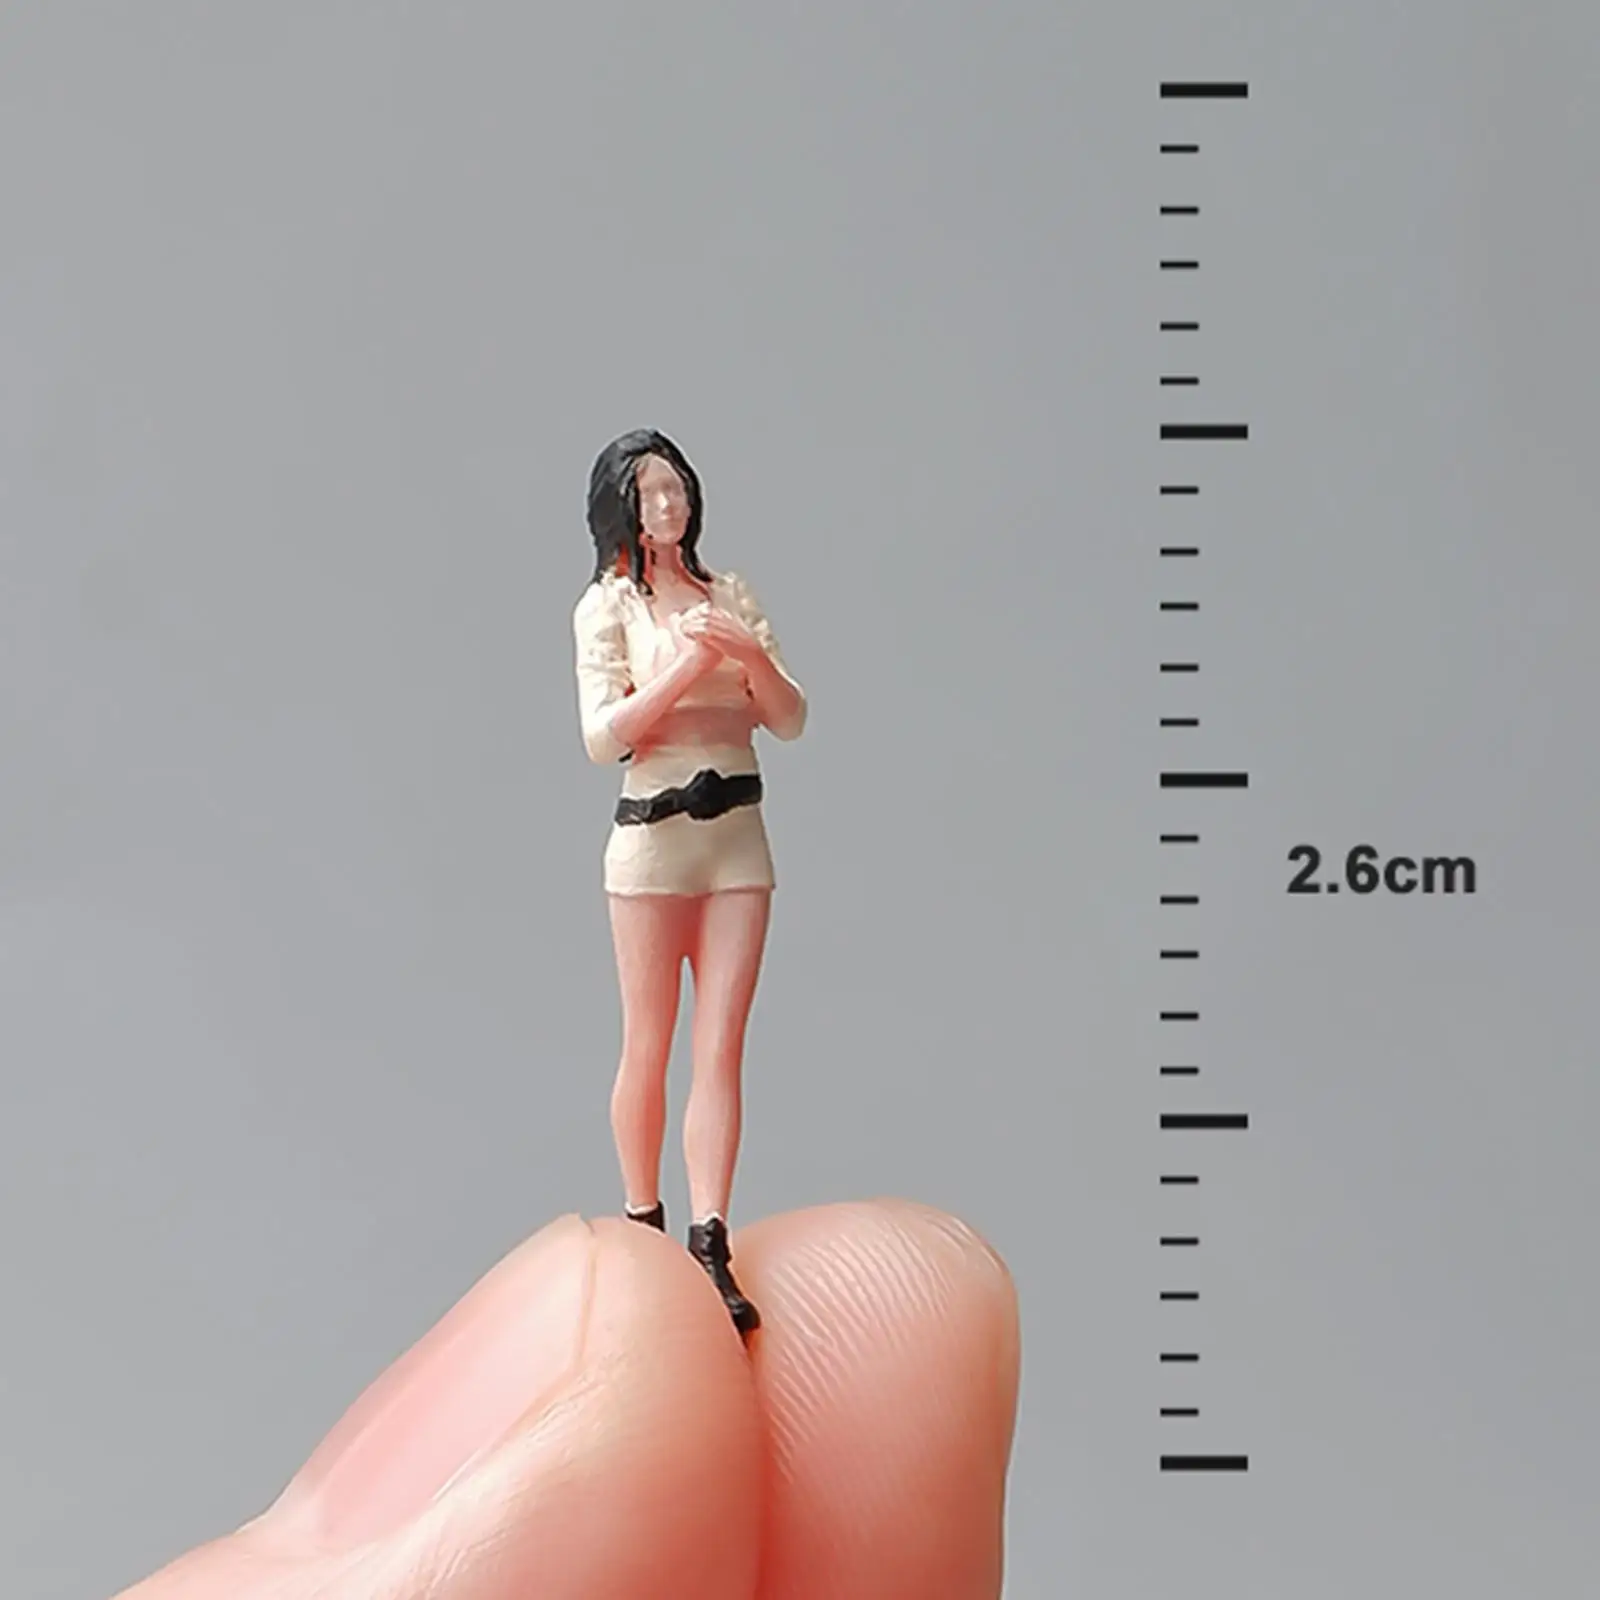 1/64 Long Hair Girl Figure Model DIY Projects Sand Table Layout Decoration Desktop Ornament S Scale Miniature Scene Dioramas